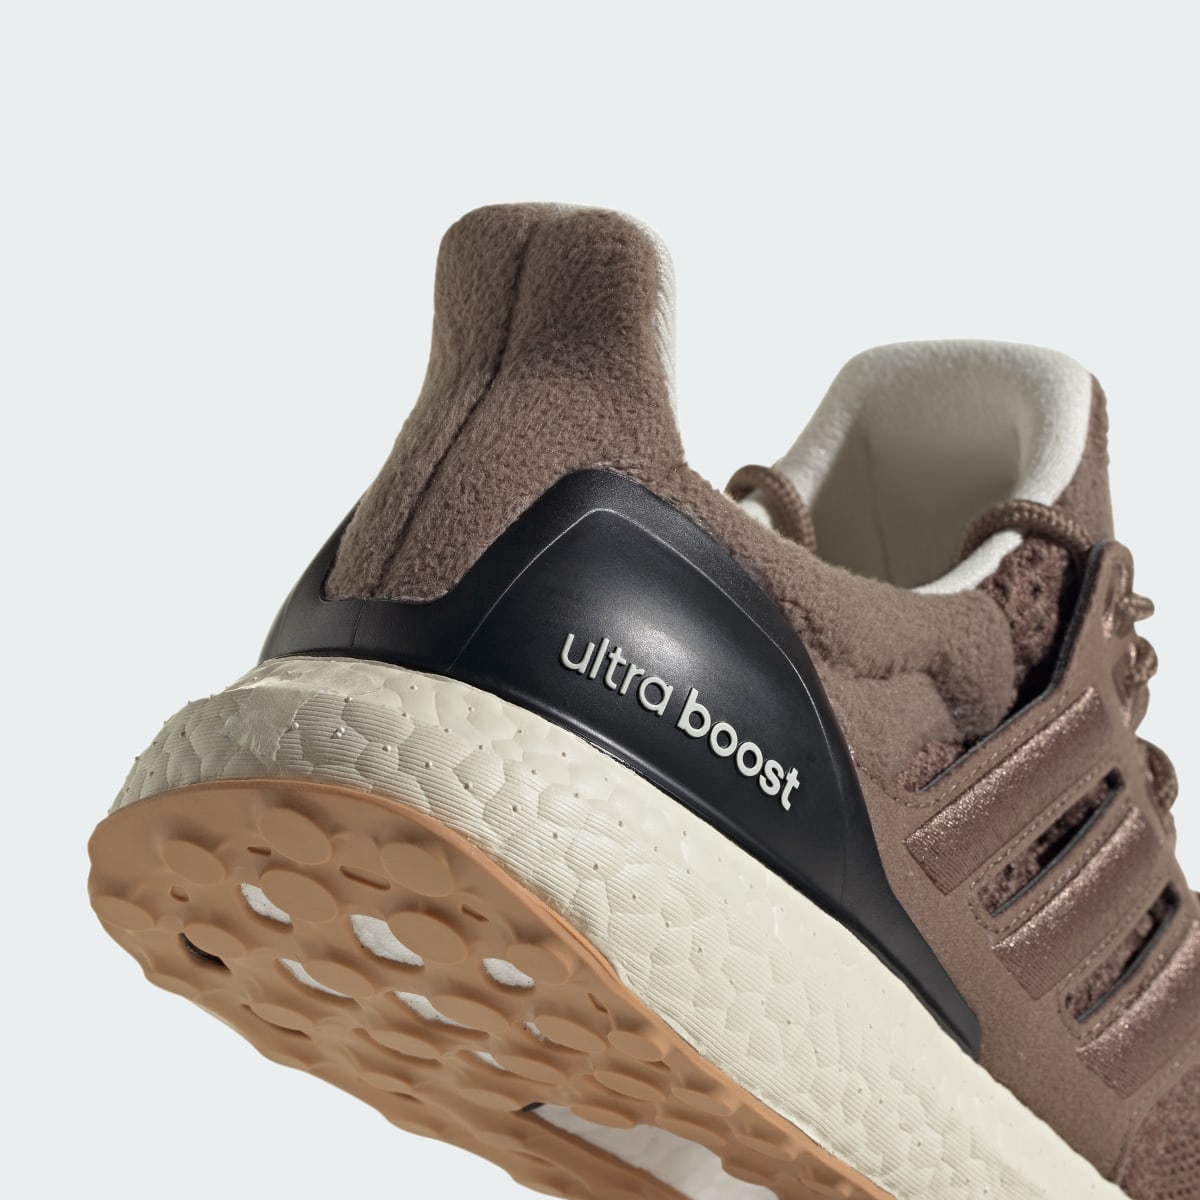 Adidas Ultraboost 1.0 Shoes. 10